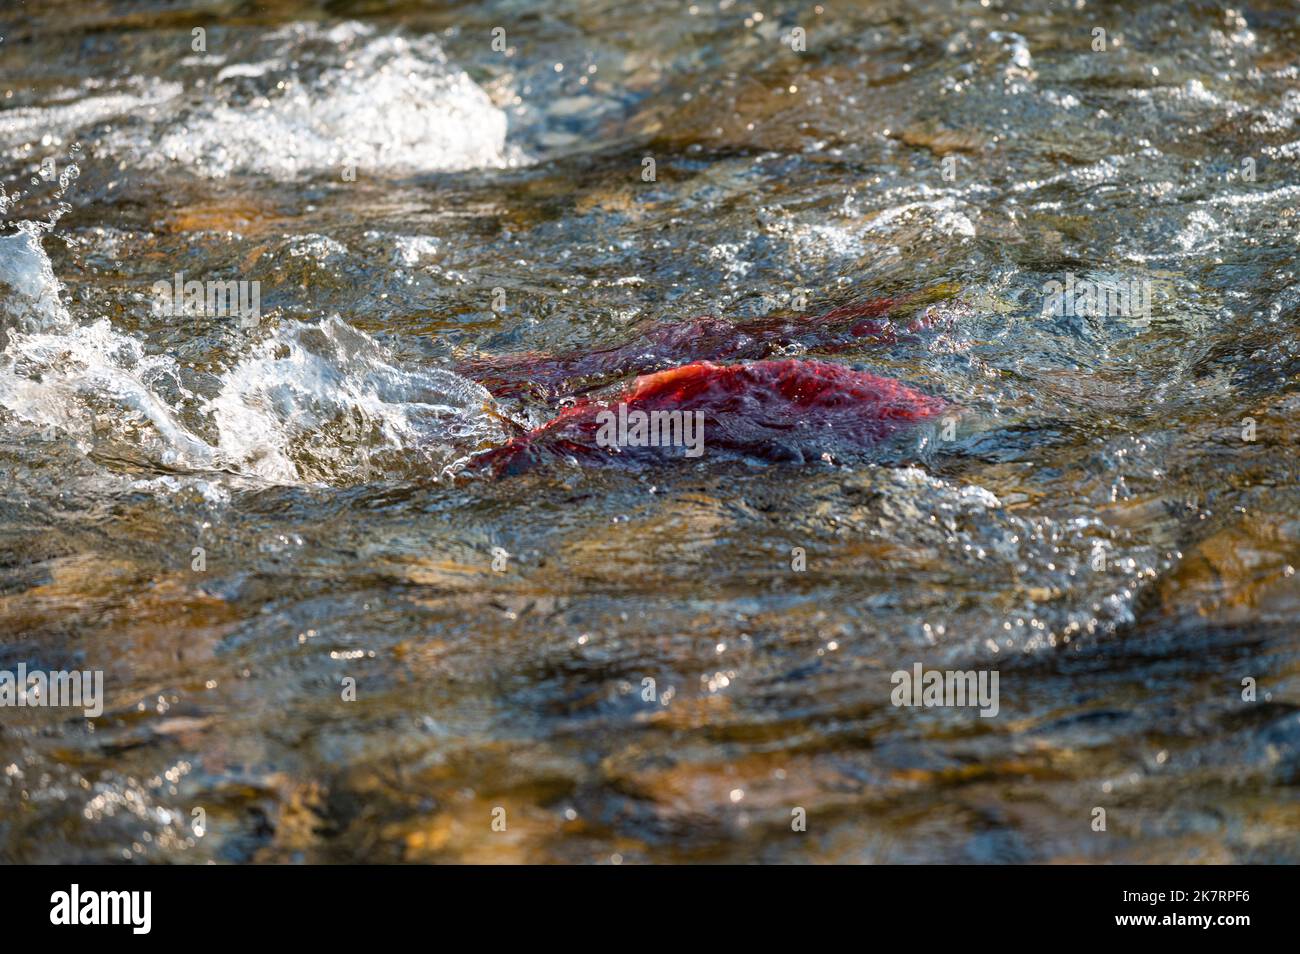 Splashing water and sockeye salmon in the Adams River swimming upstream as part of the massive quadrennial 'dominant' salmon run migration. Stock Photo